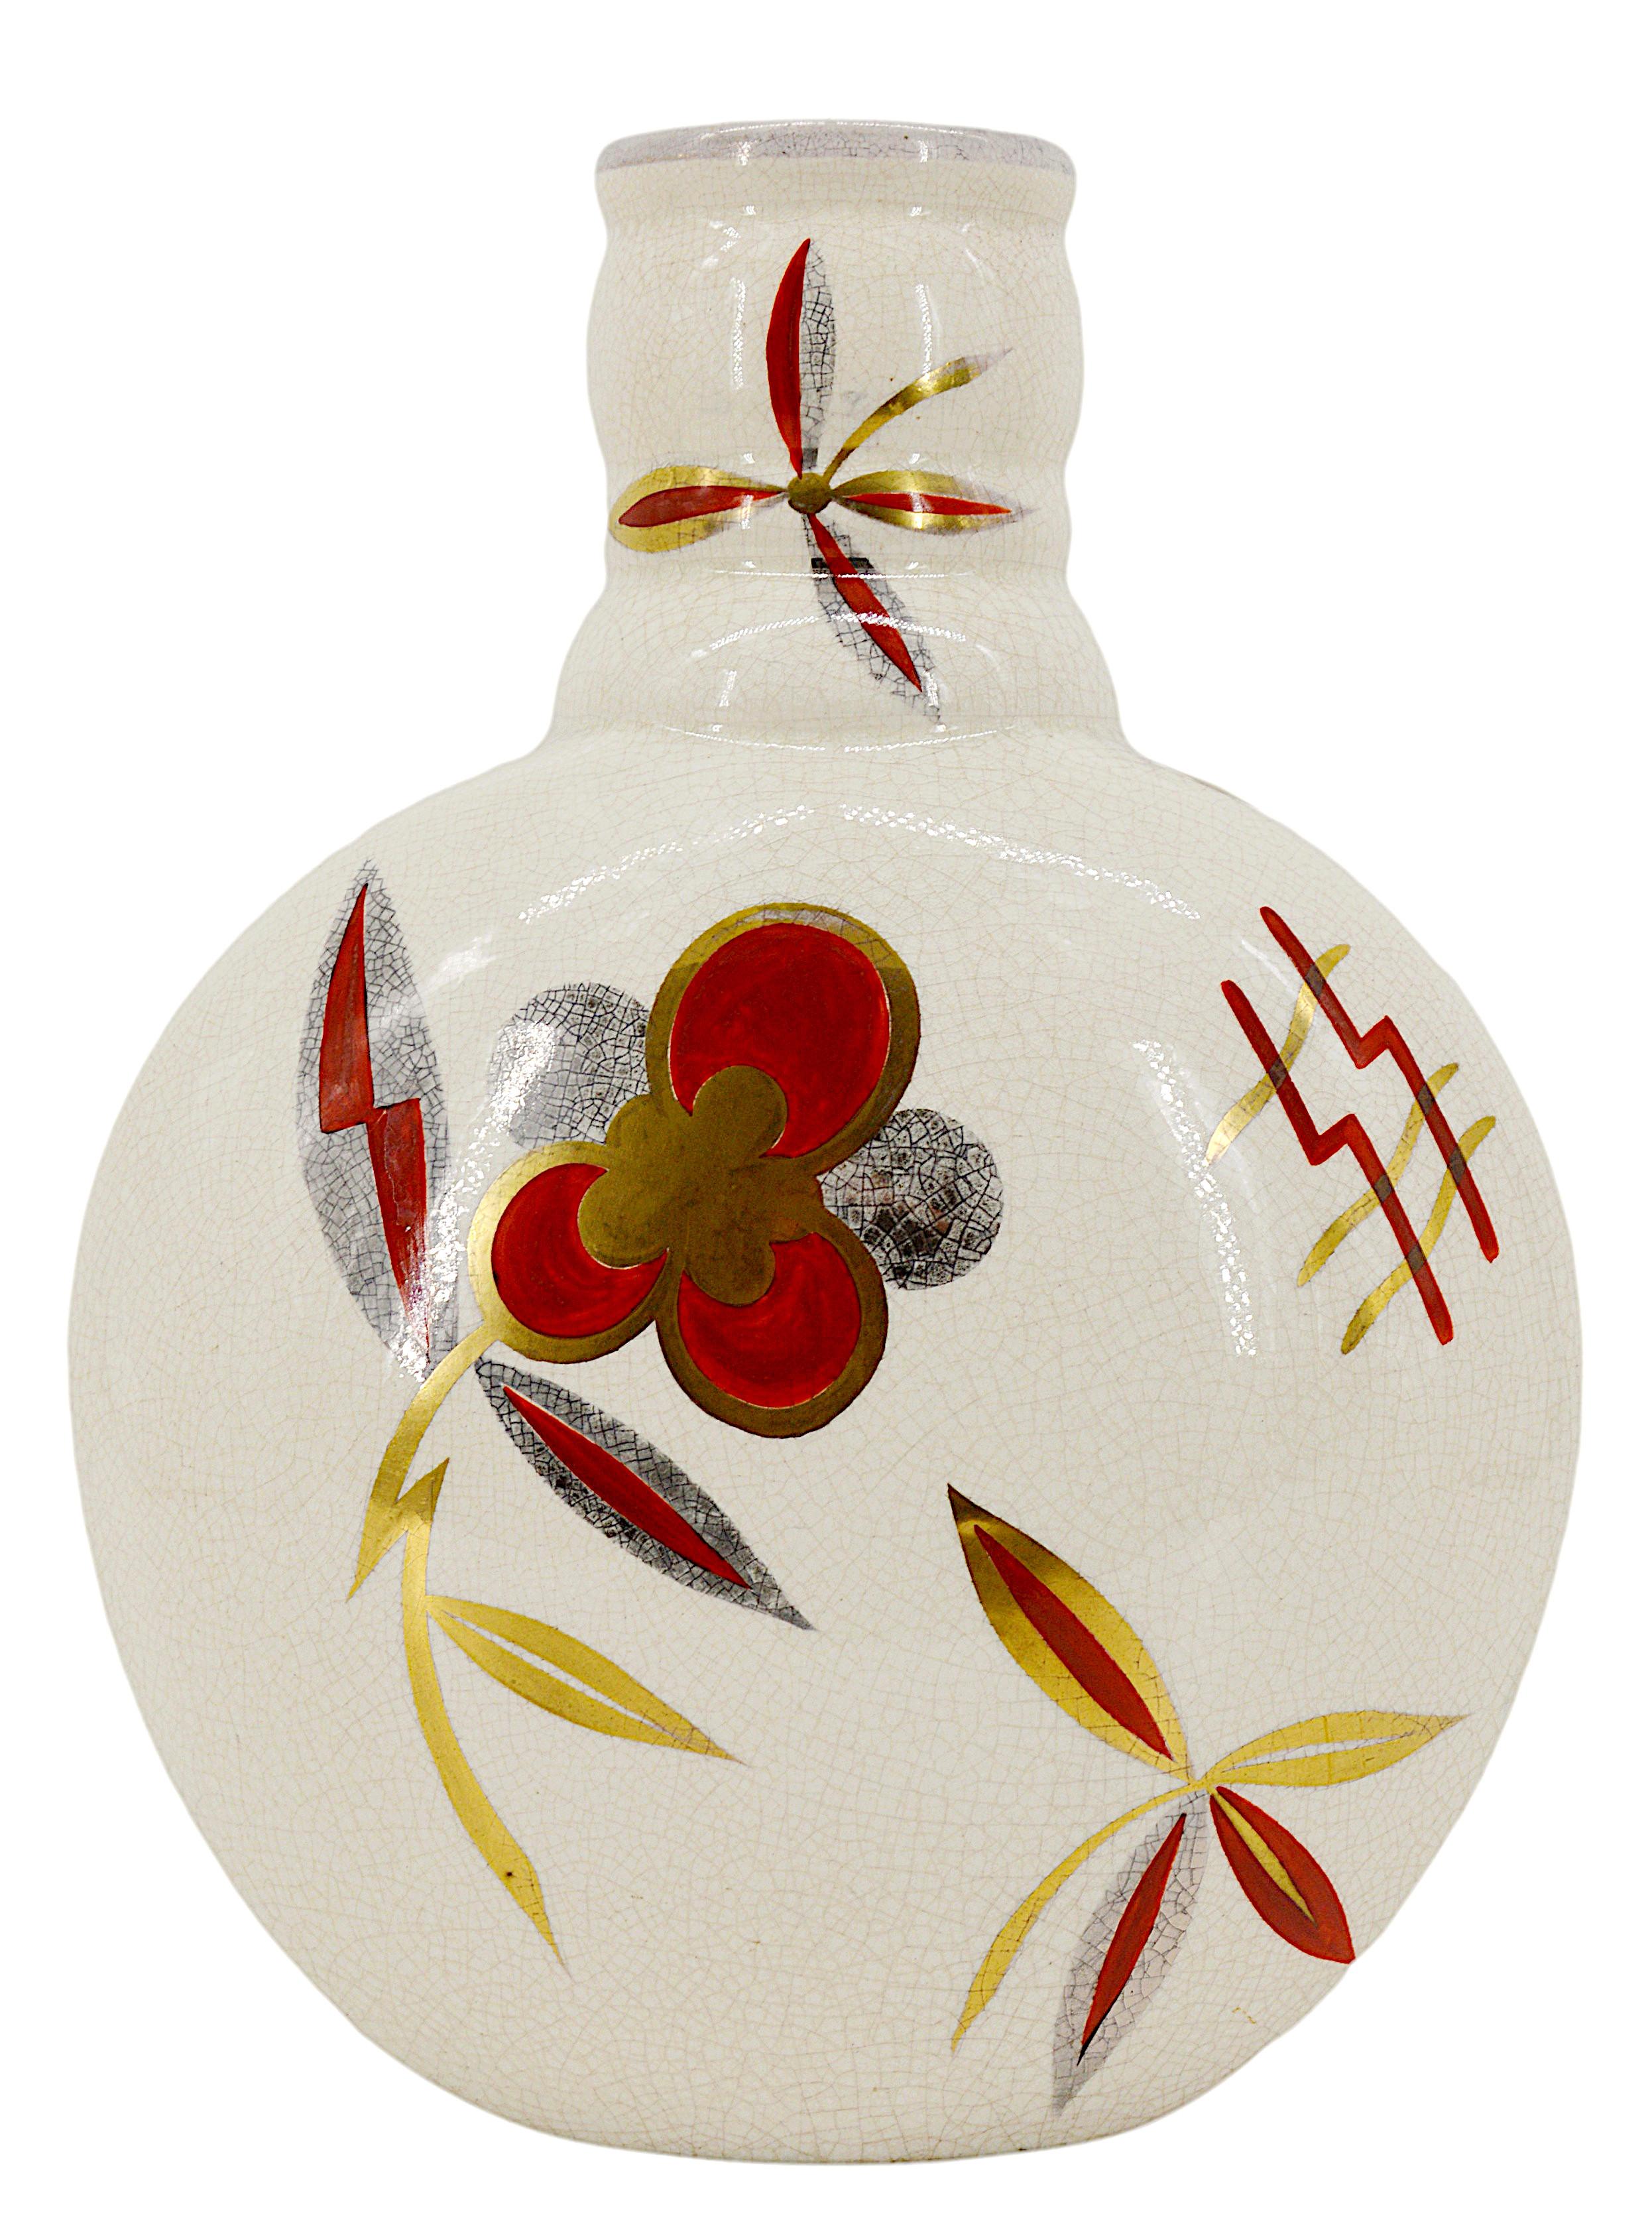 French Art Deco ceramic vase by Sainte-Radegonde, France, 1930s. Double stylized floral decoration on a crackle glaze ceramic. Measures: height: 12.8